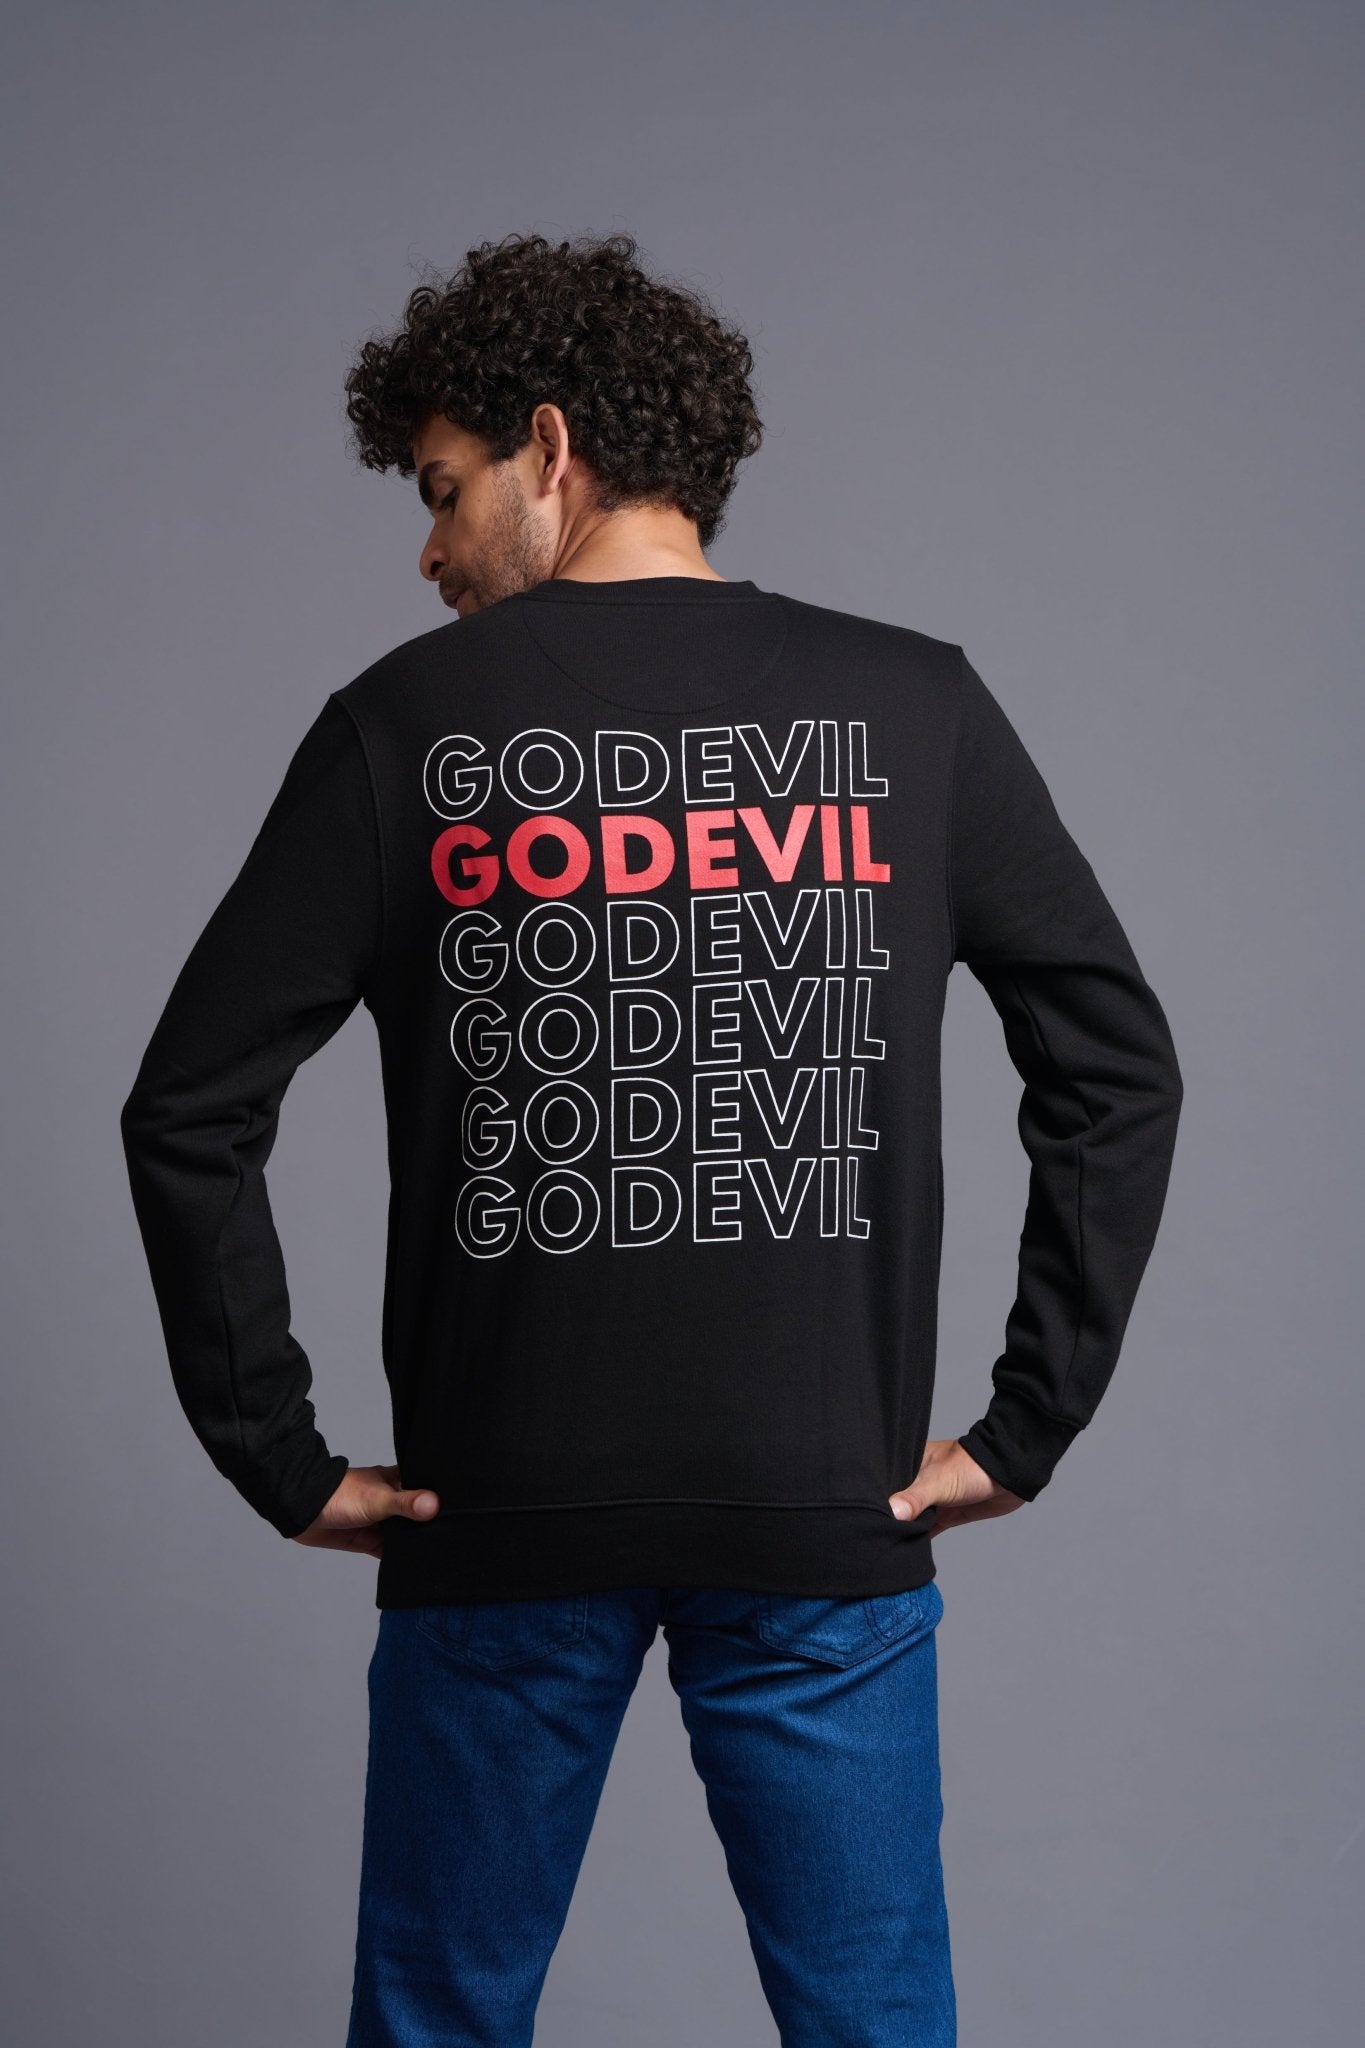 Go Devil Printed Black Sweatshirt for Men - Go Devil